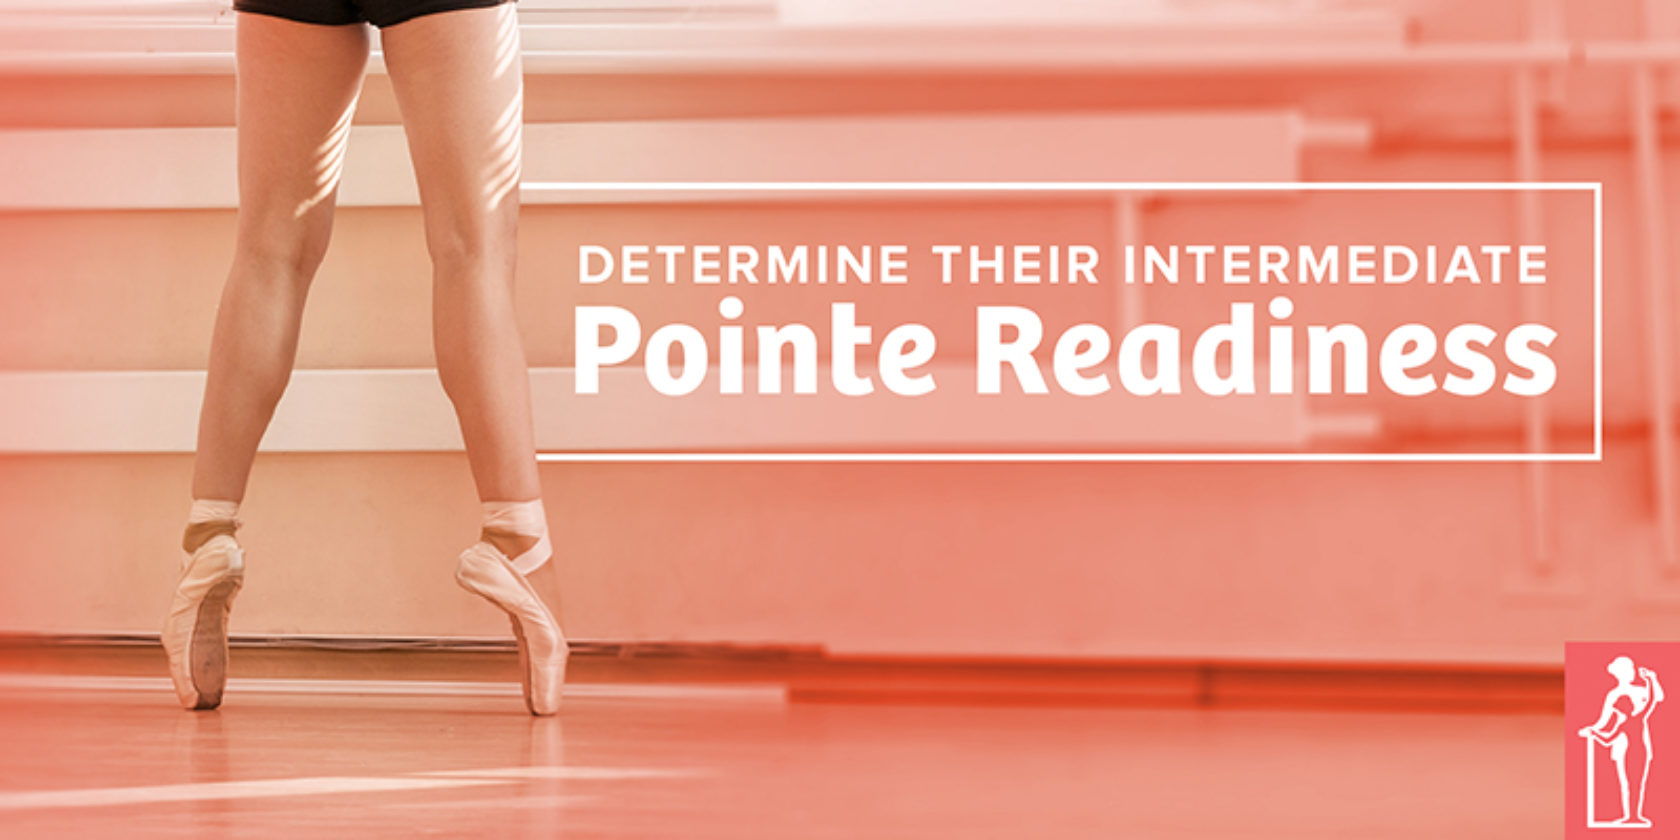 Determine Their Intermediate Pointe Readiness